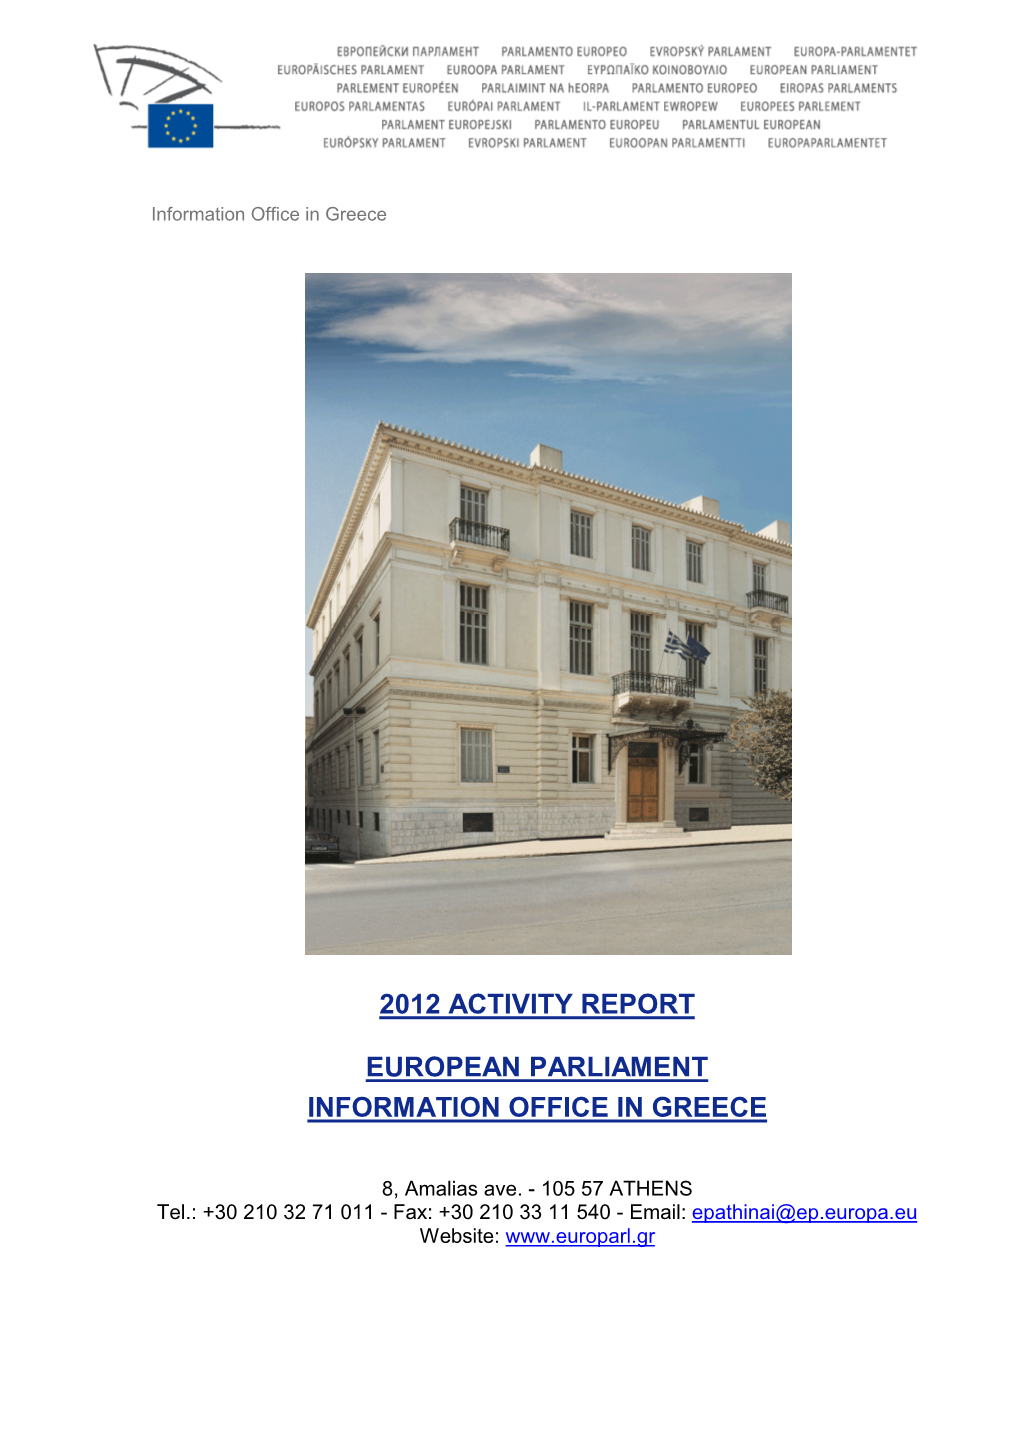 2012 Activity Report European Parliament Information